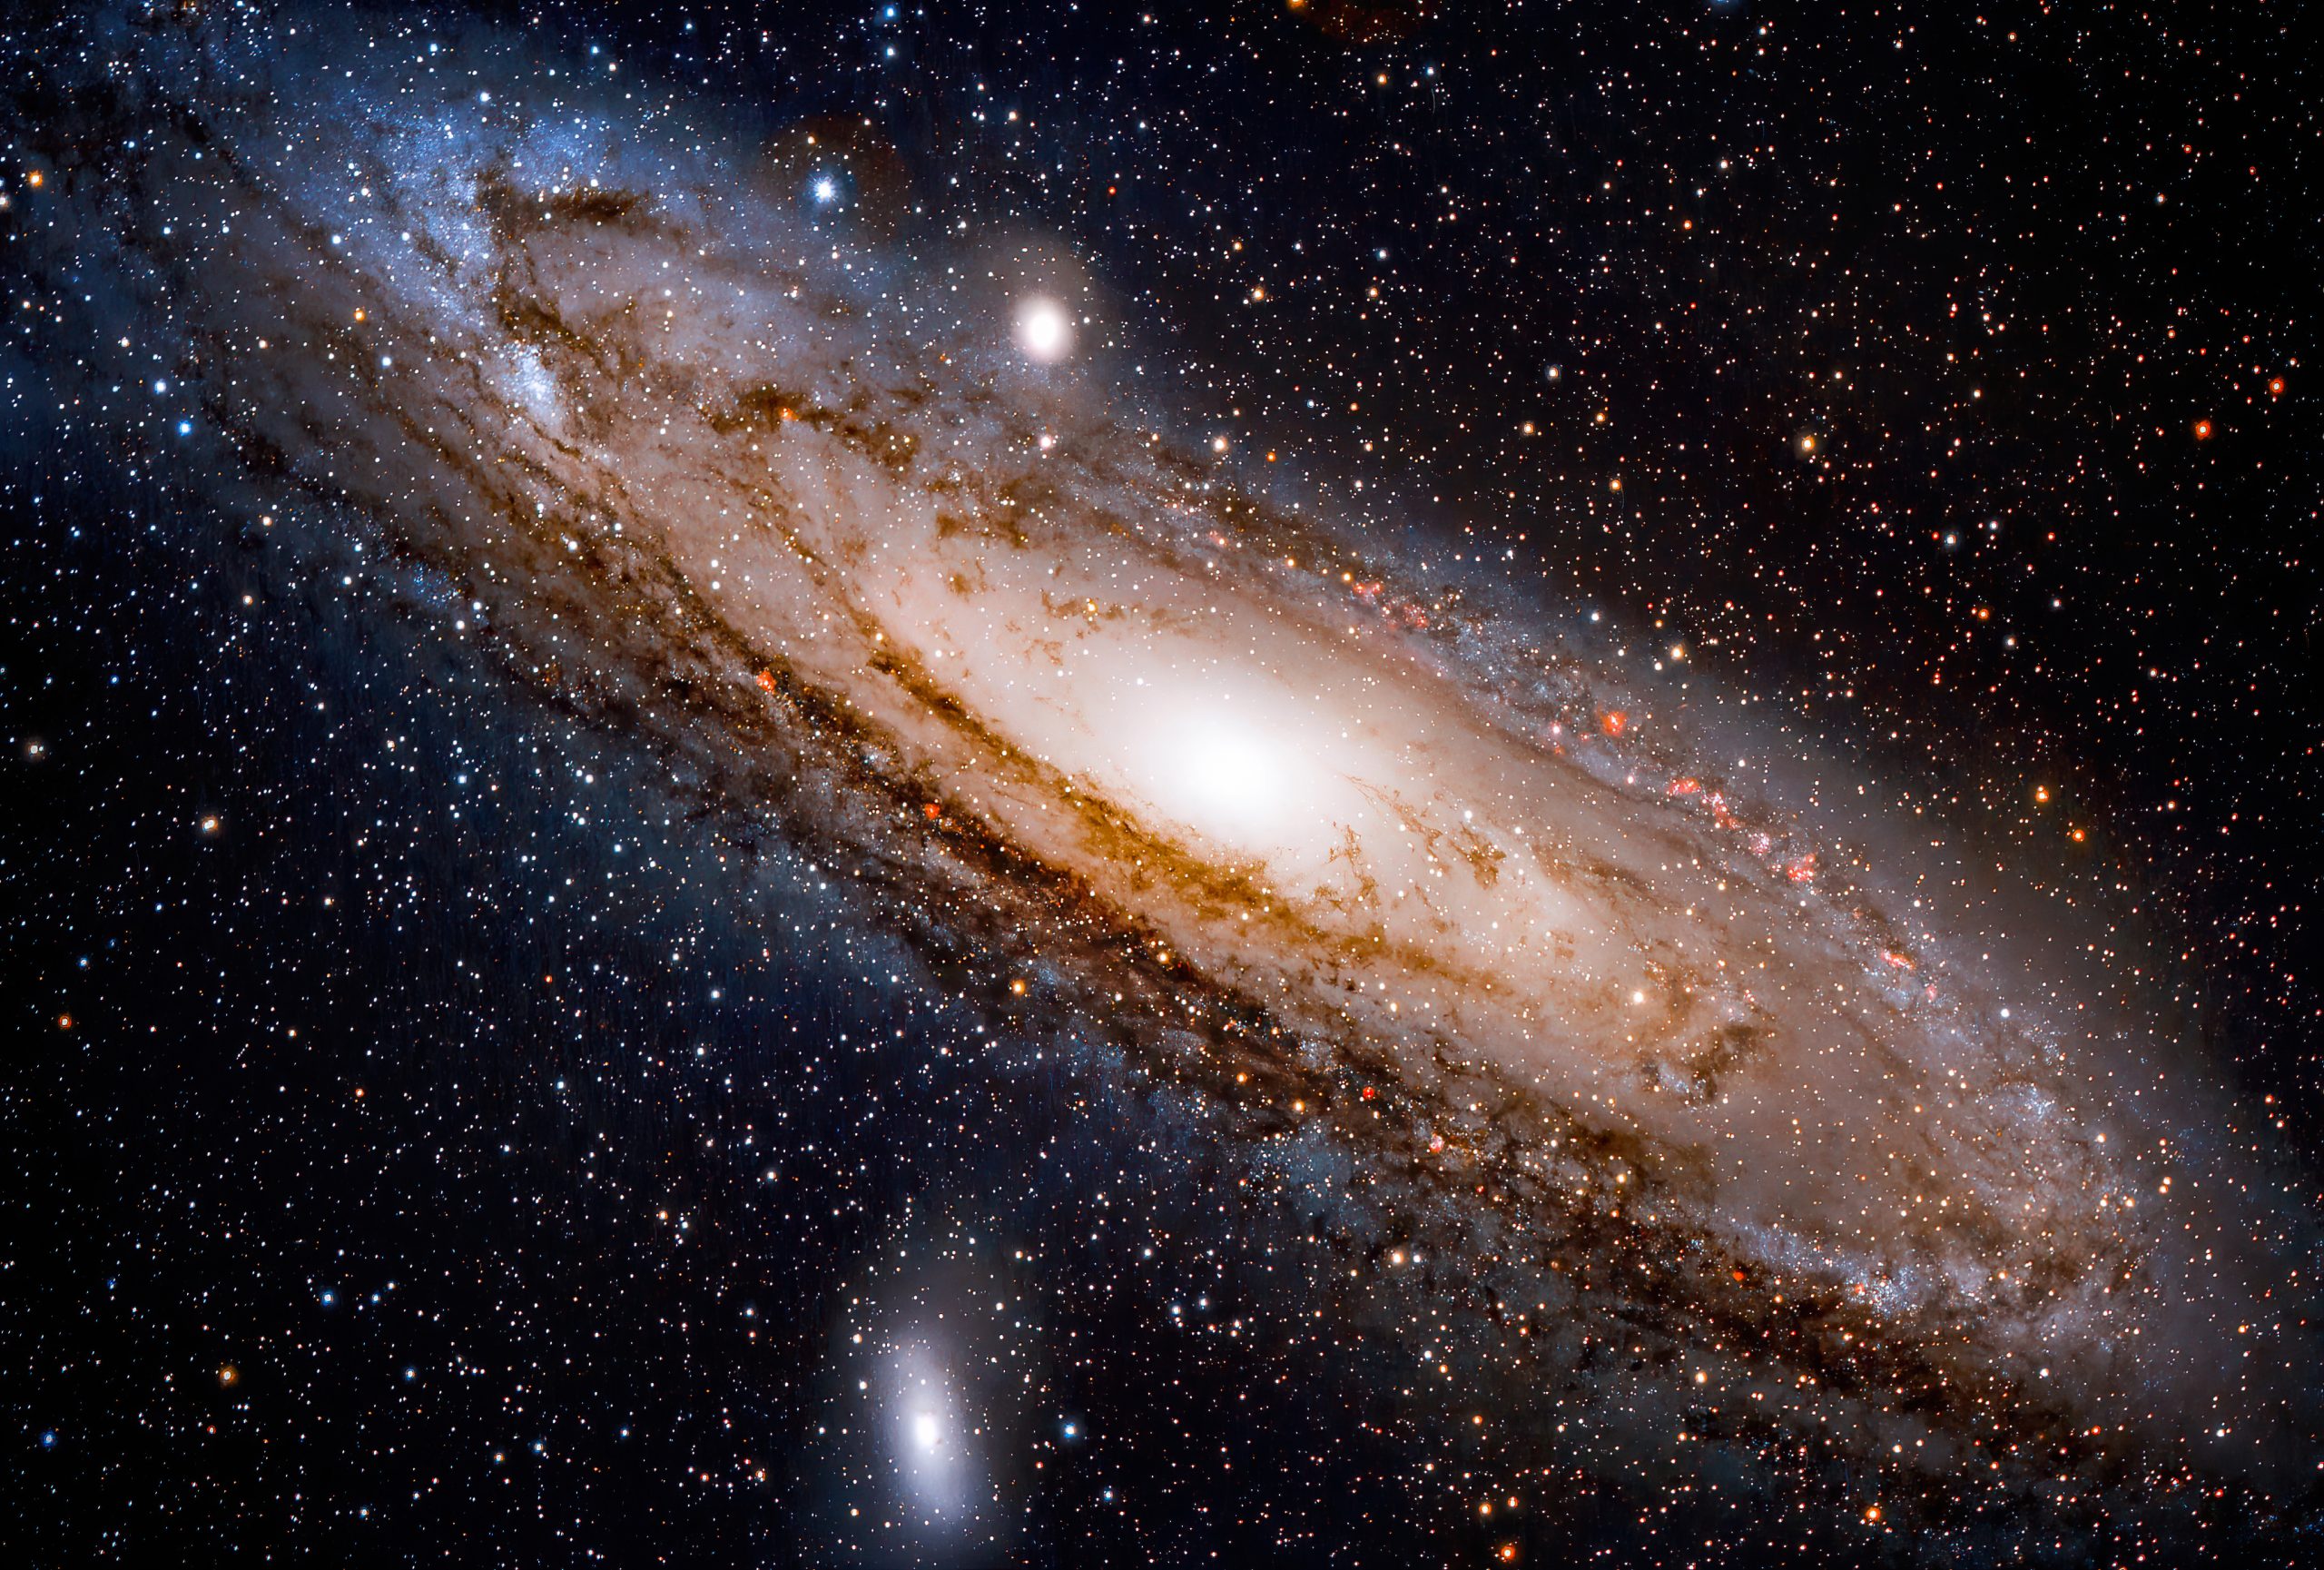 A Photograph of the Andromeda Galaxy. Image Credit: Wikimedia Commons / CC BY-SA 4.0.